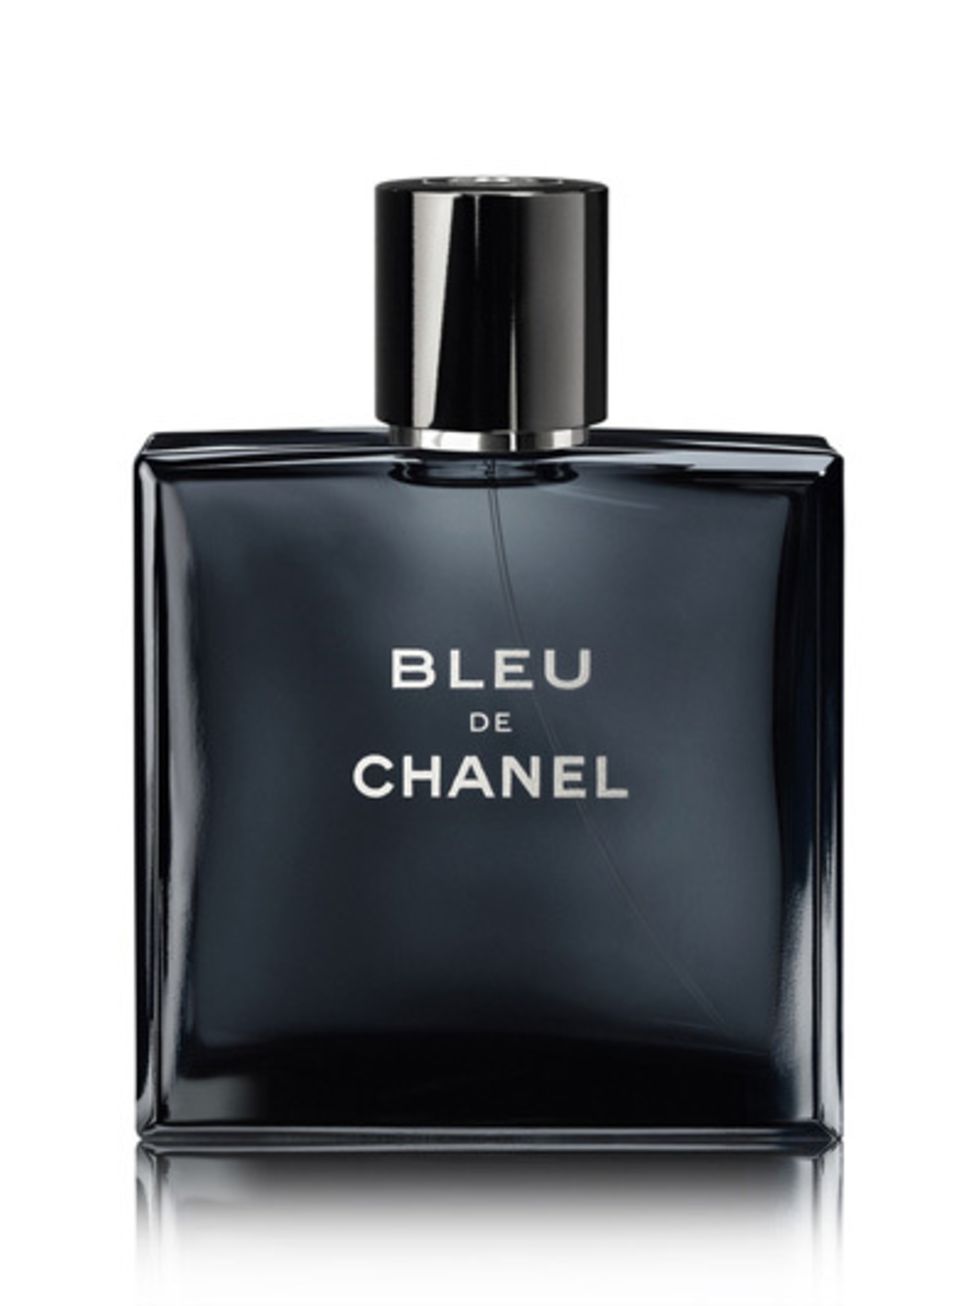 Liquid, Fluid, Perfume, Product, Bottle, Style, Black, Black-and-white, Grey, Cosmetics, 